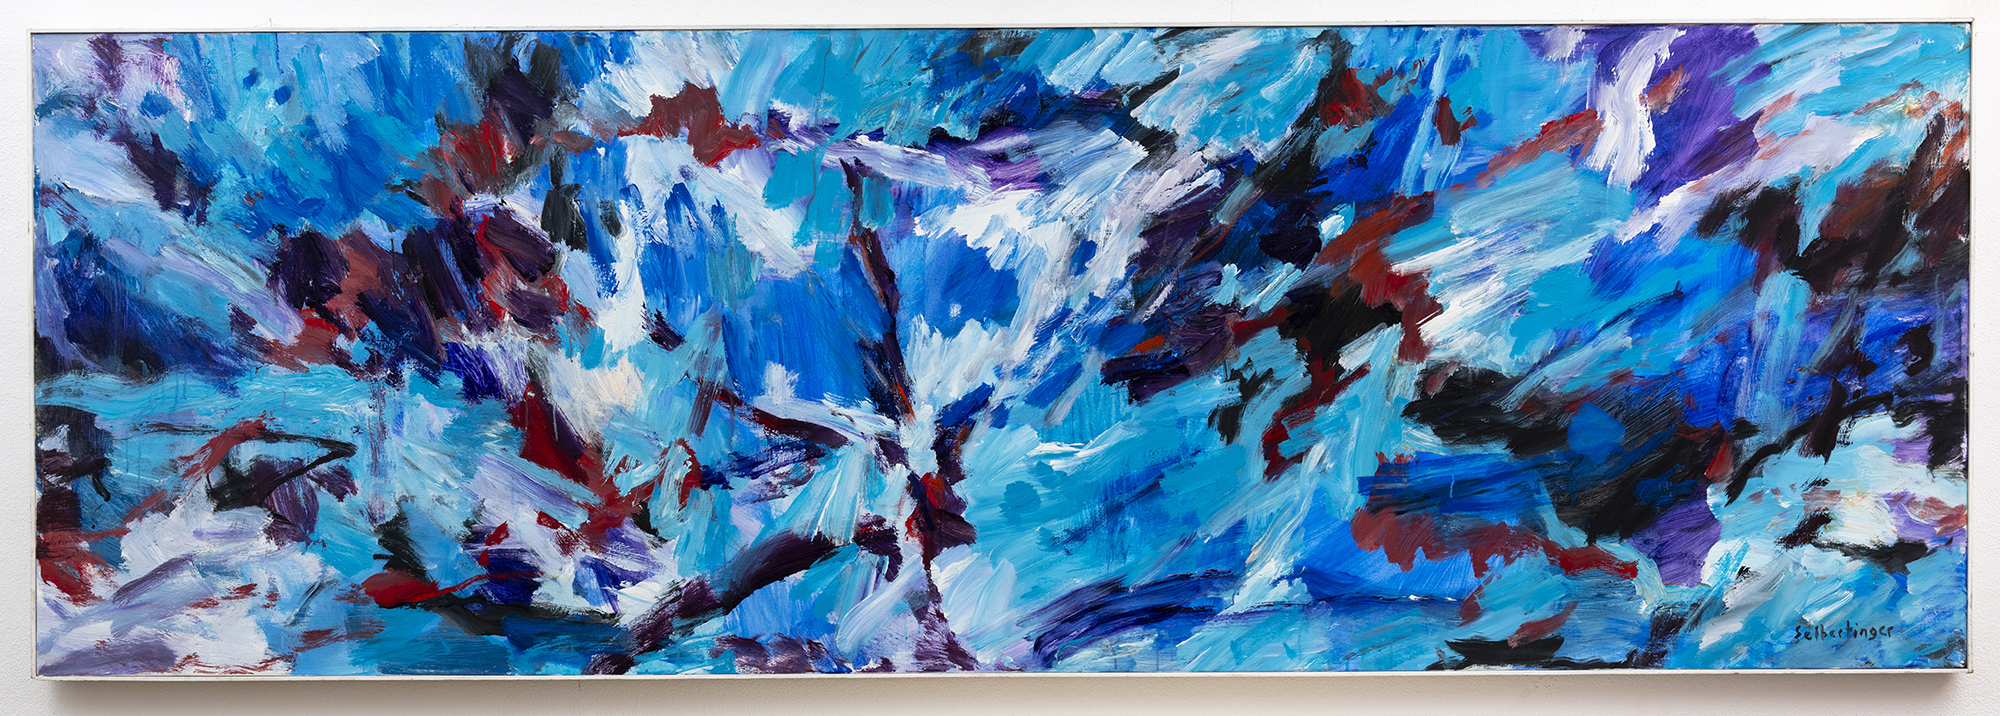 Johannes Selbertinger, no title (RS), 2012, acrylic paint on canvas, 90 x 270 cm